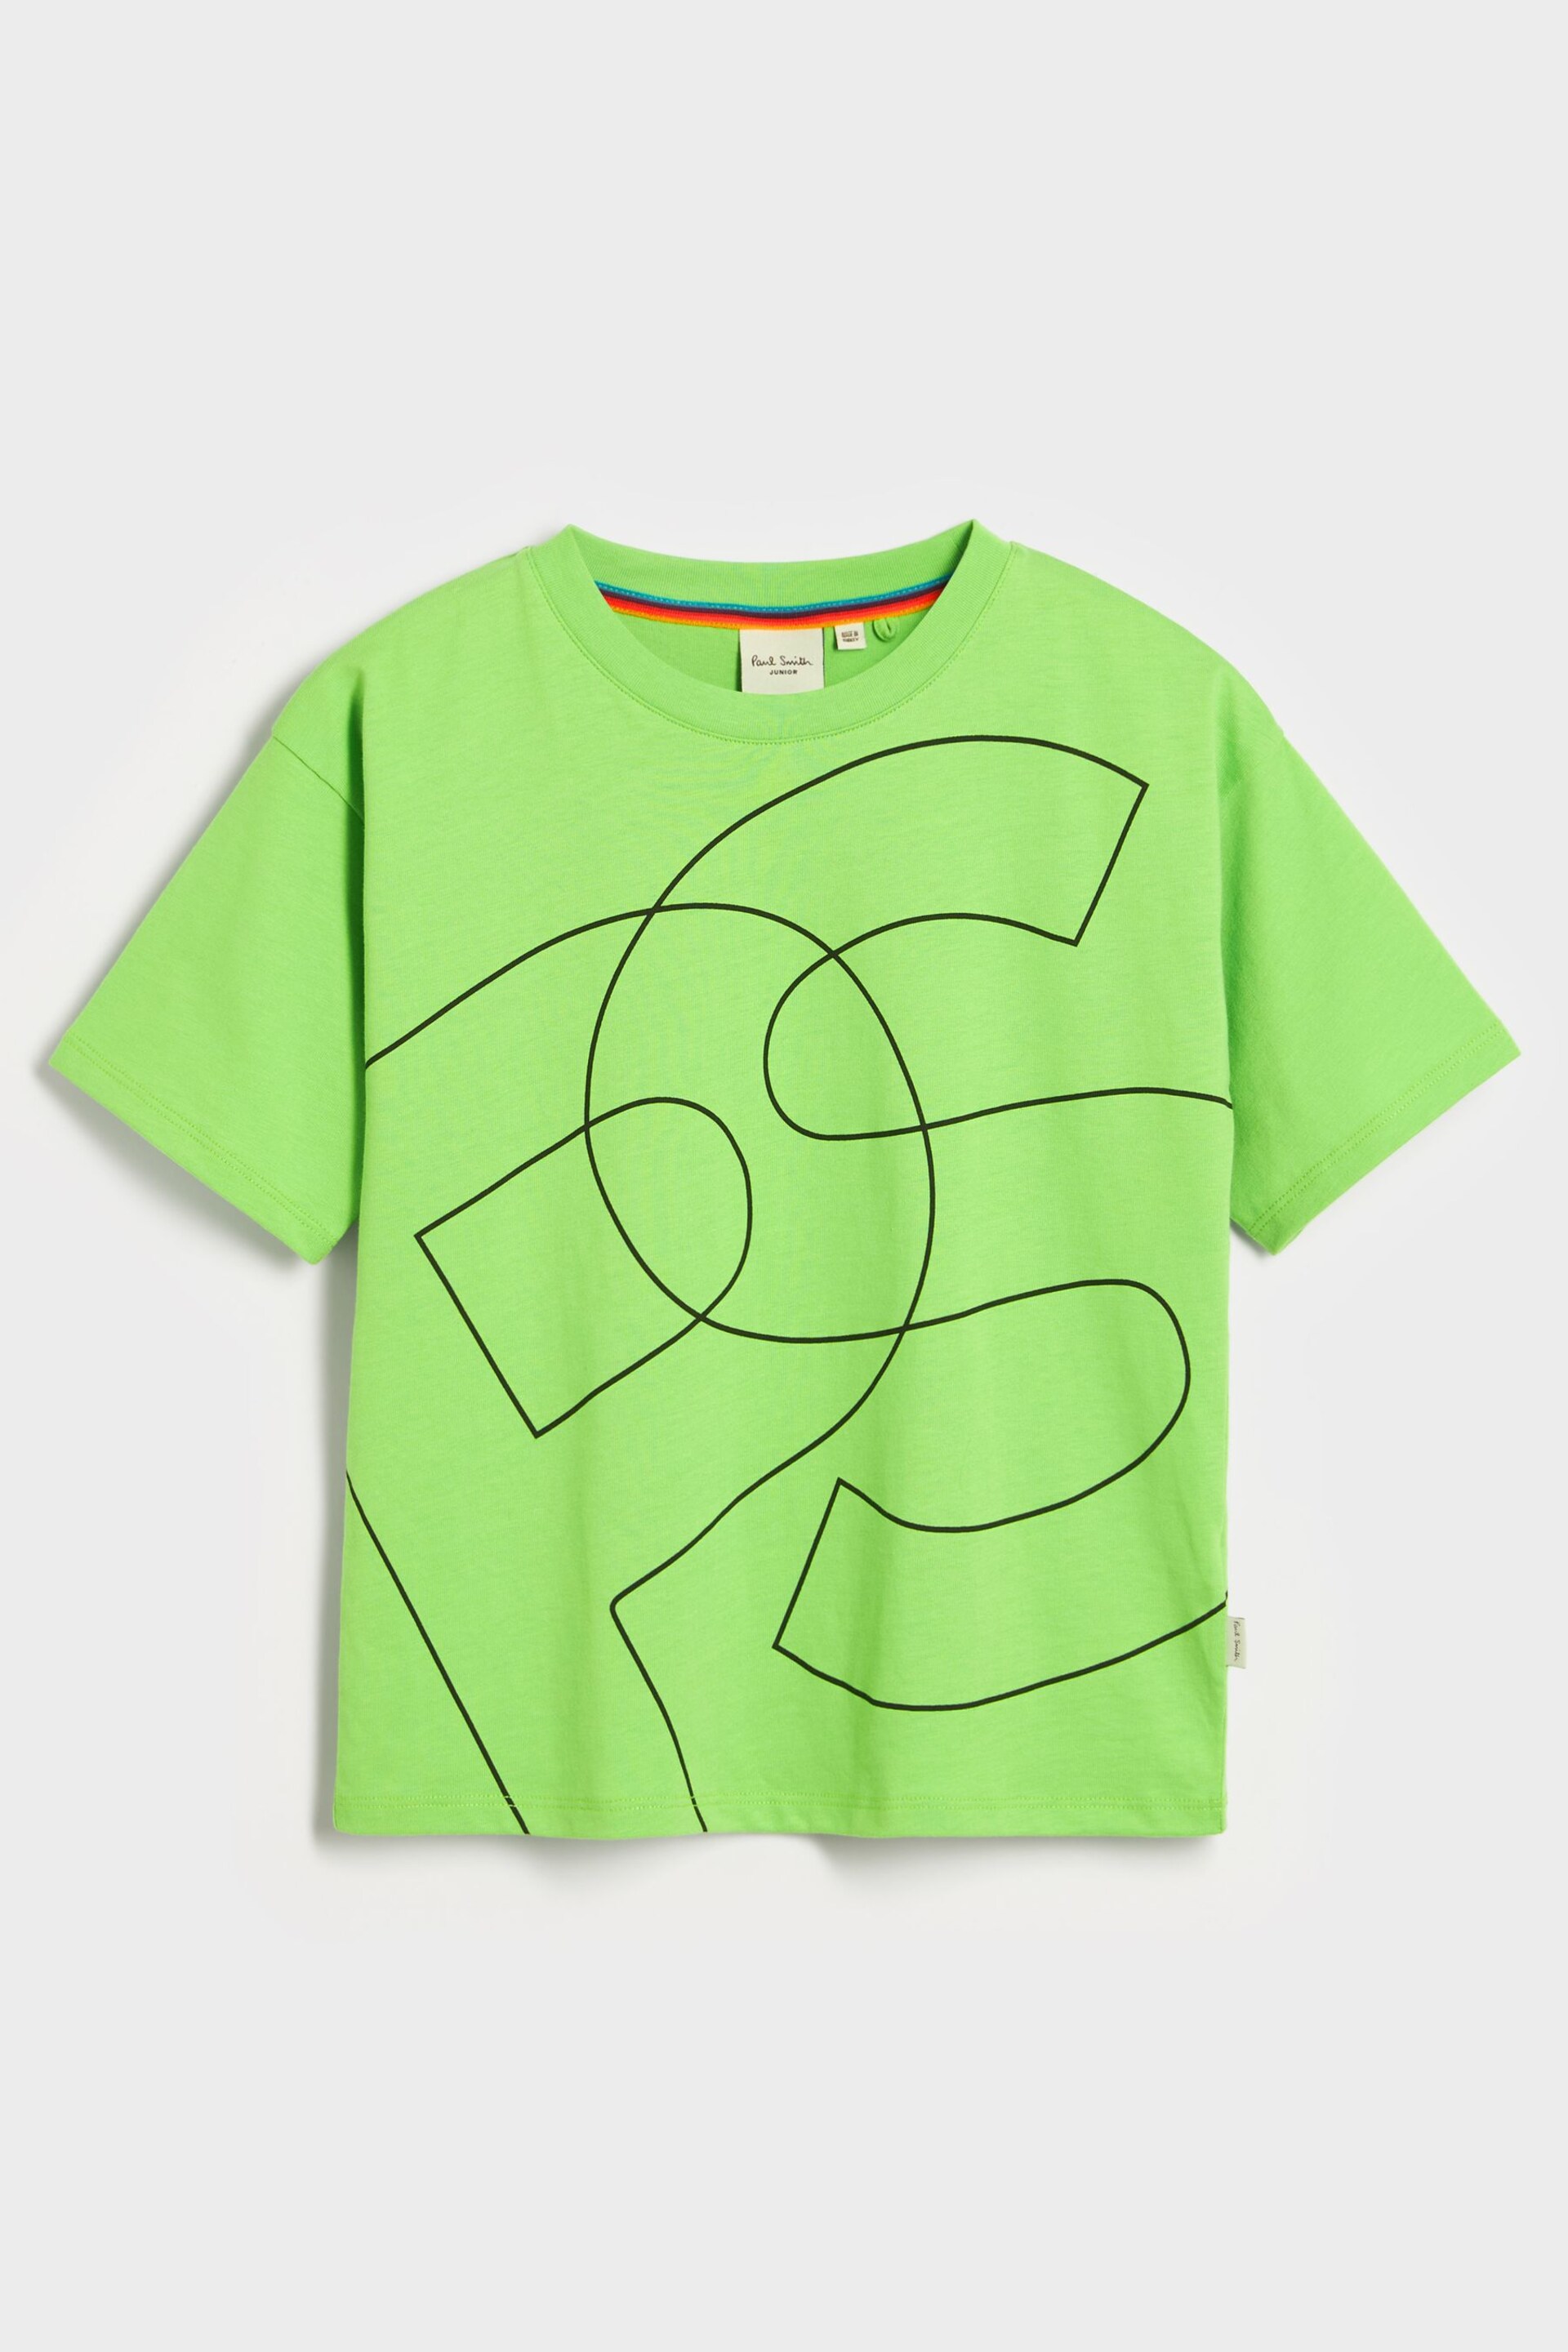 Paul Smith Junior Boys Oversized PS Short Sleeve Print T-Shirt - Image 7 of 10